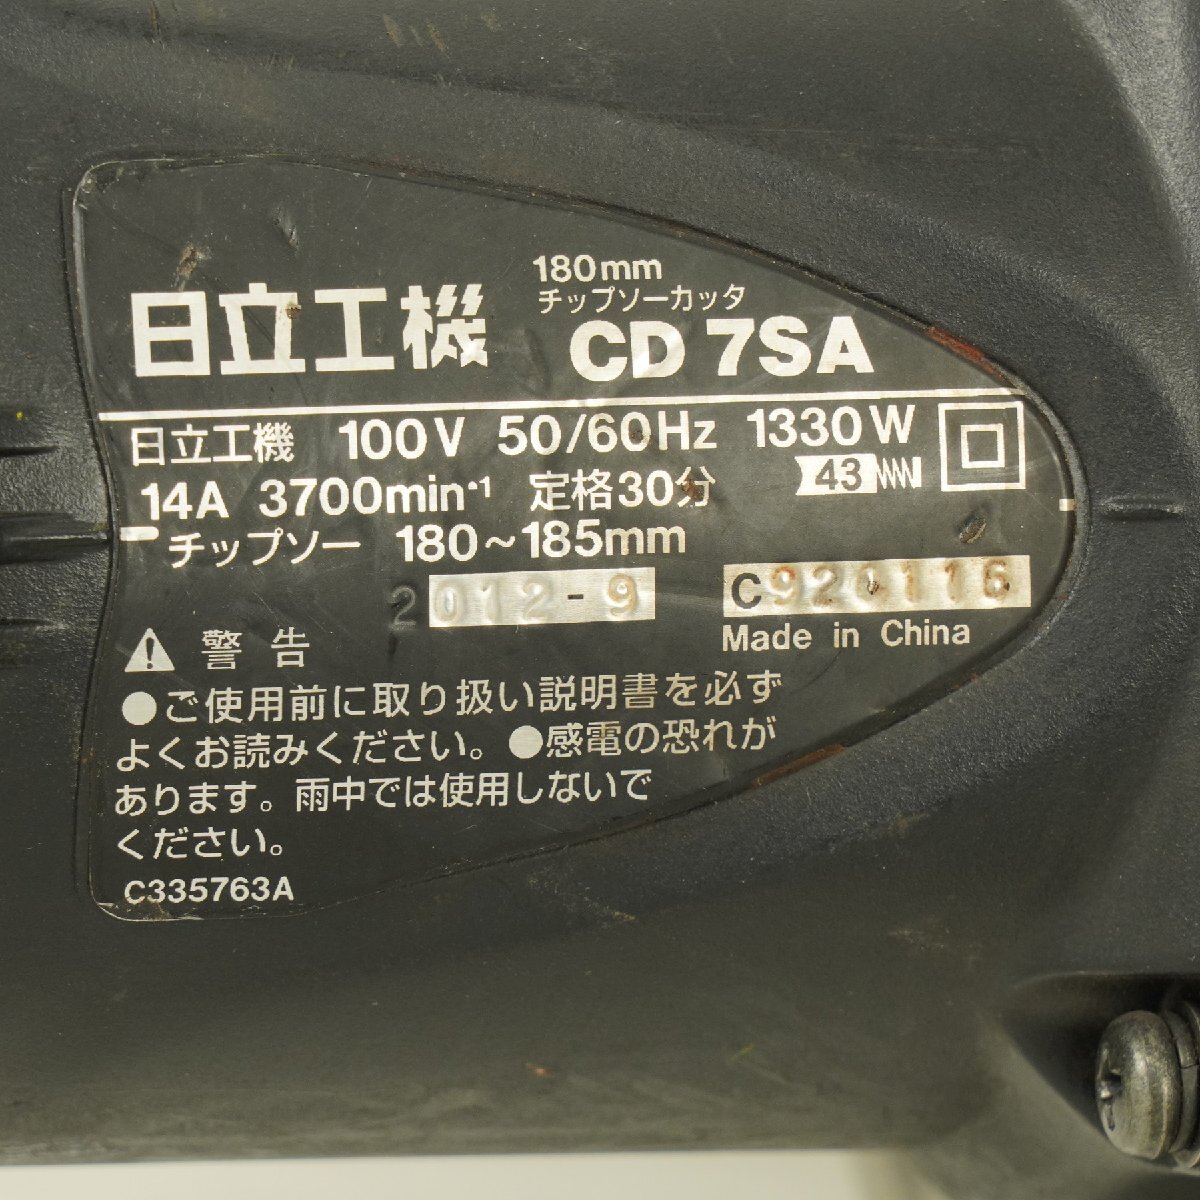 HITACHI 日立工機 180mmチップソーカッタ CD7SA [B2566]の画像4